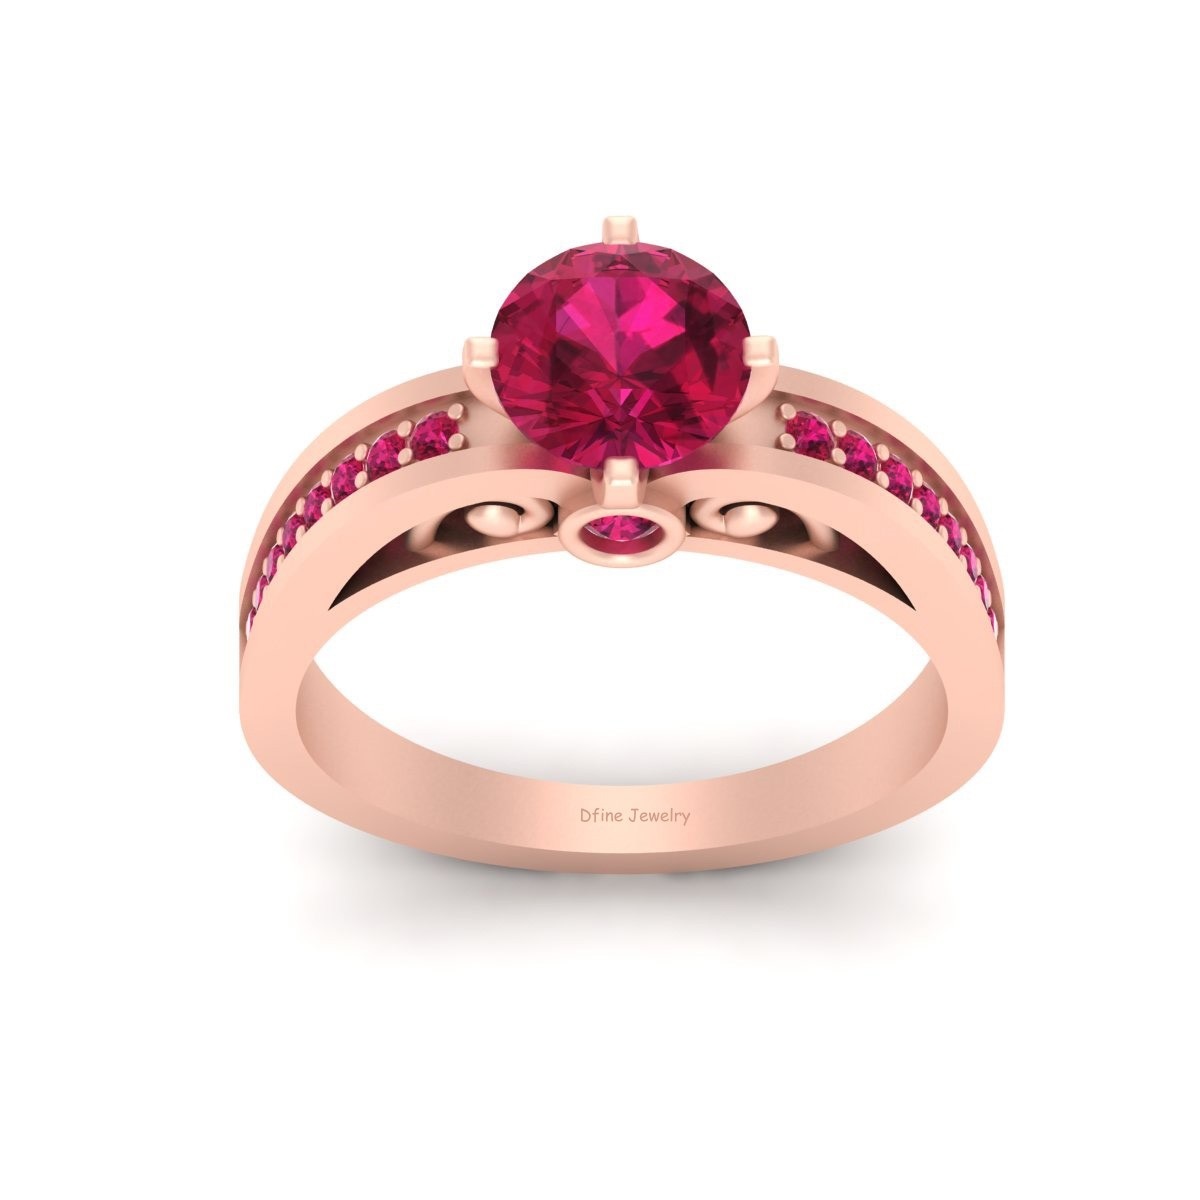 Sleeping Beauty Princess Aurora Inspired Engagement Ring Womens Wedding Jewelry